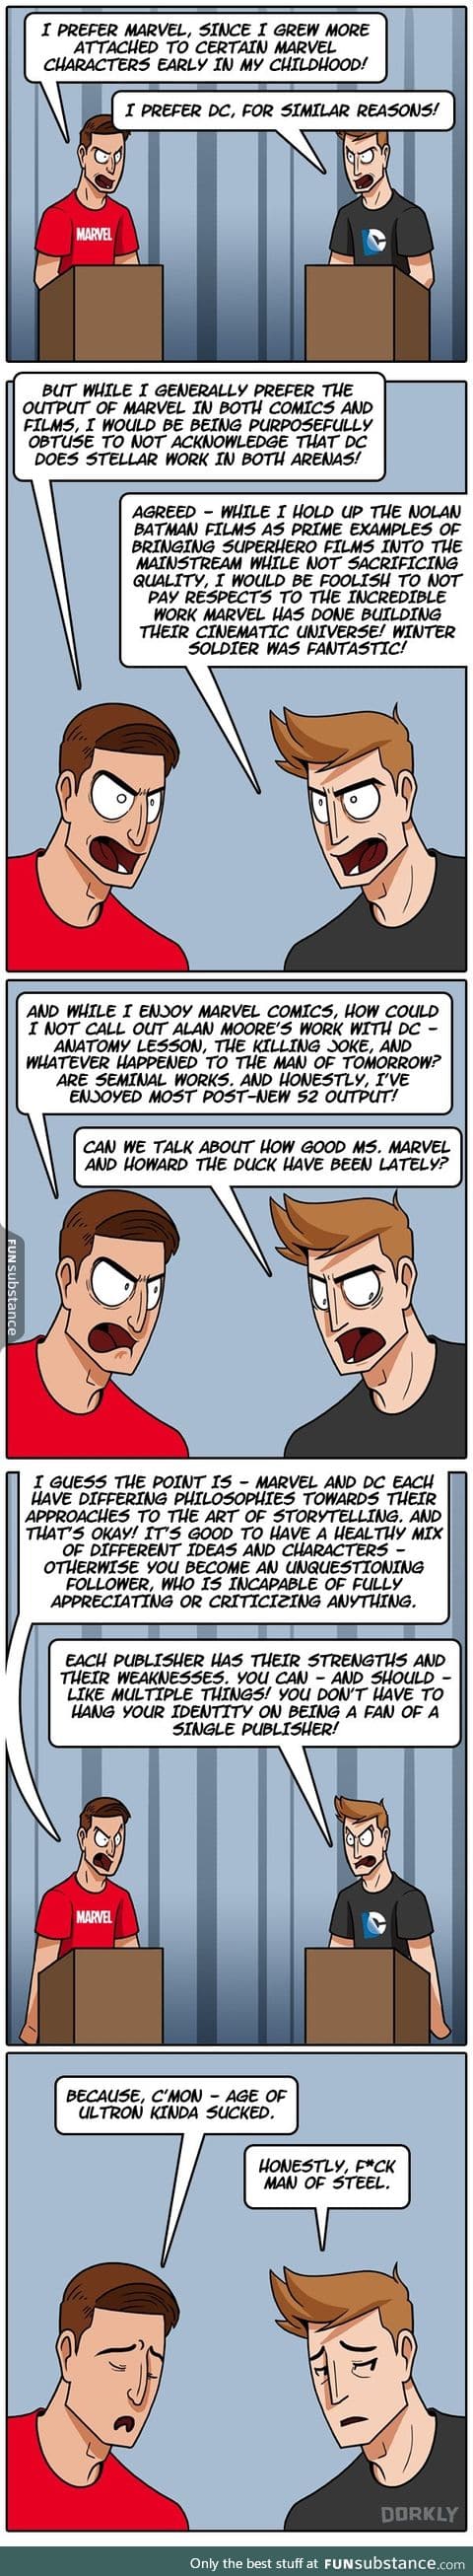 Marvel vs DC argument